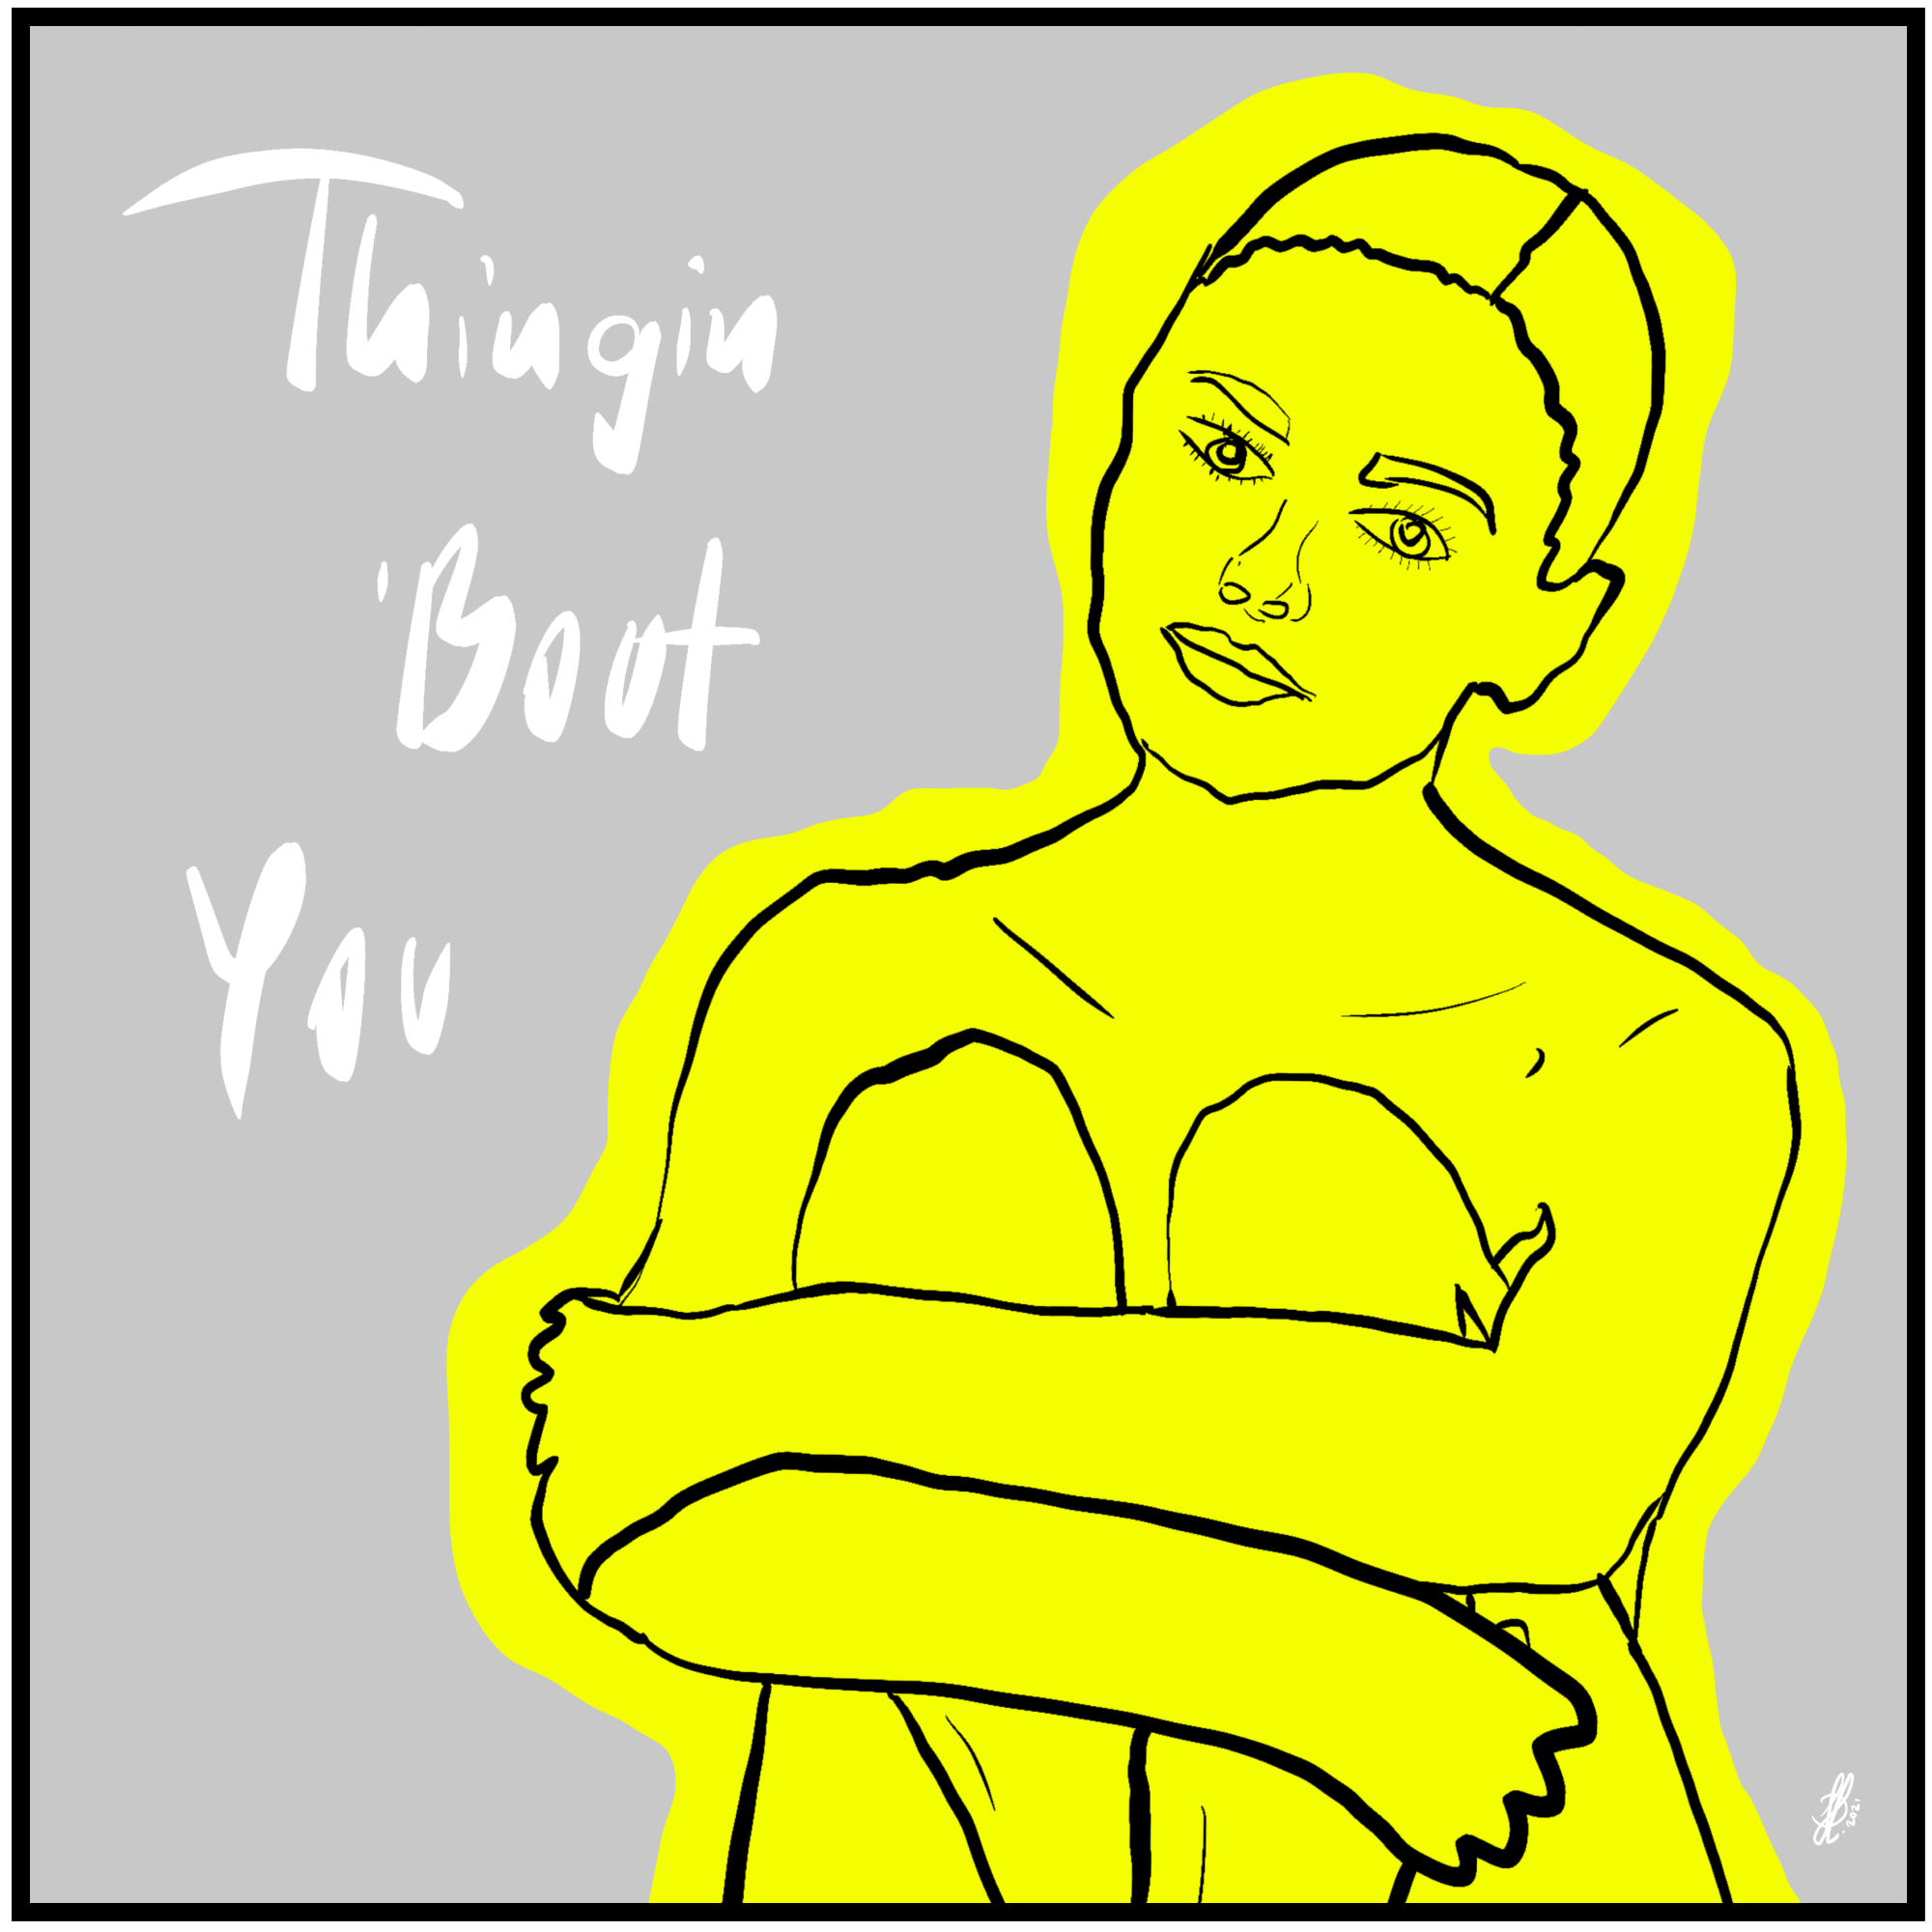 Plakat: "Thinkin Bout You"